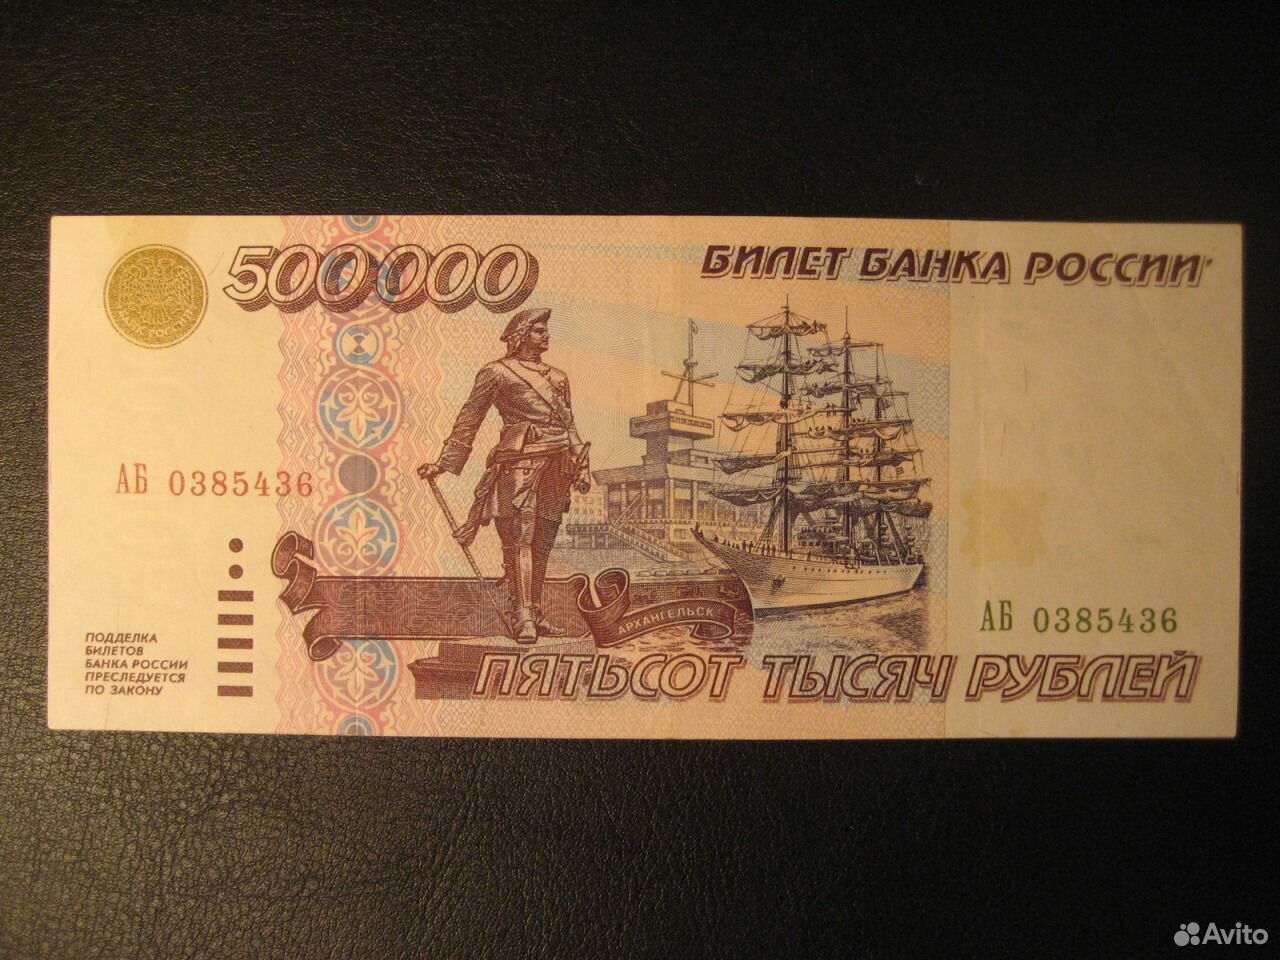 займу 500000 рублей